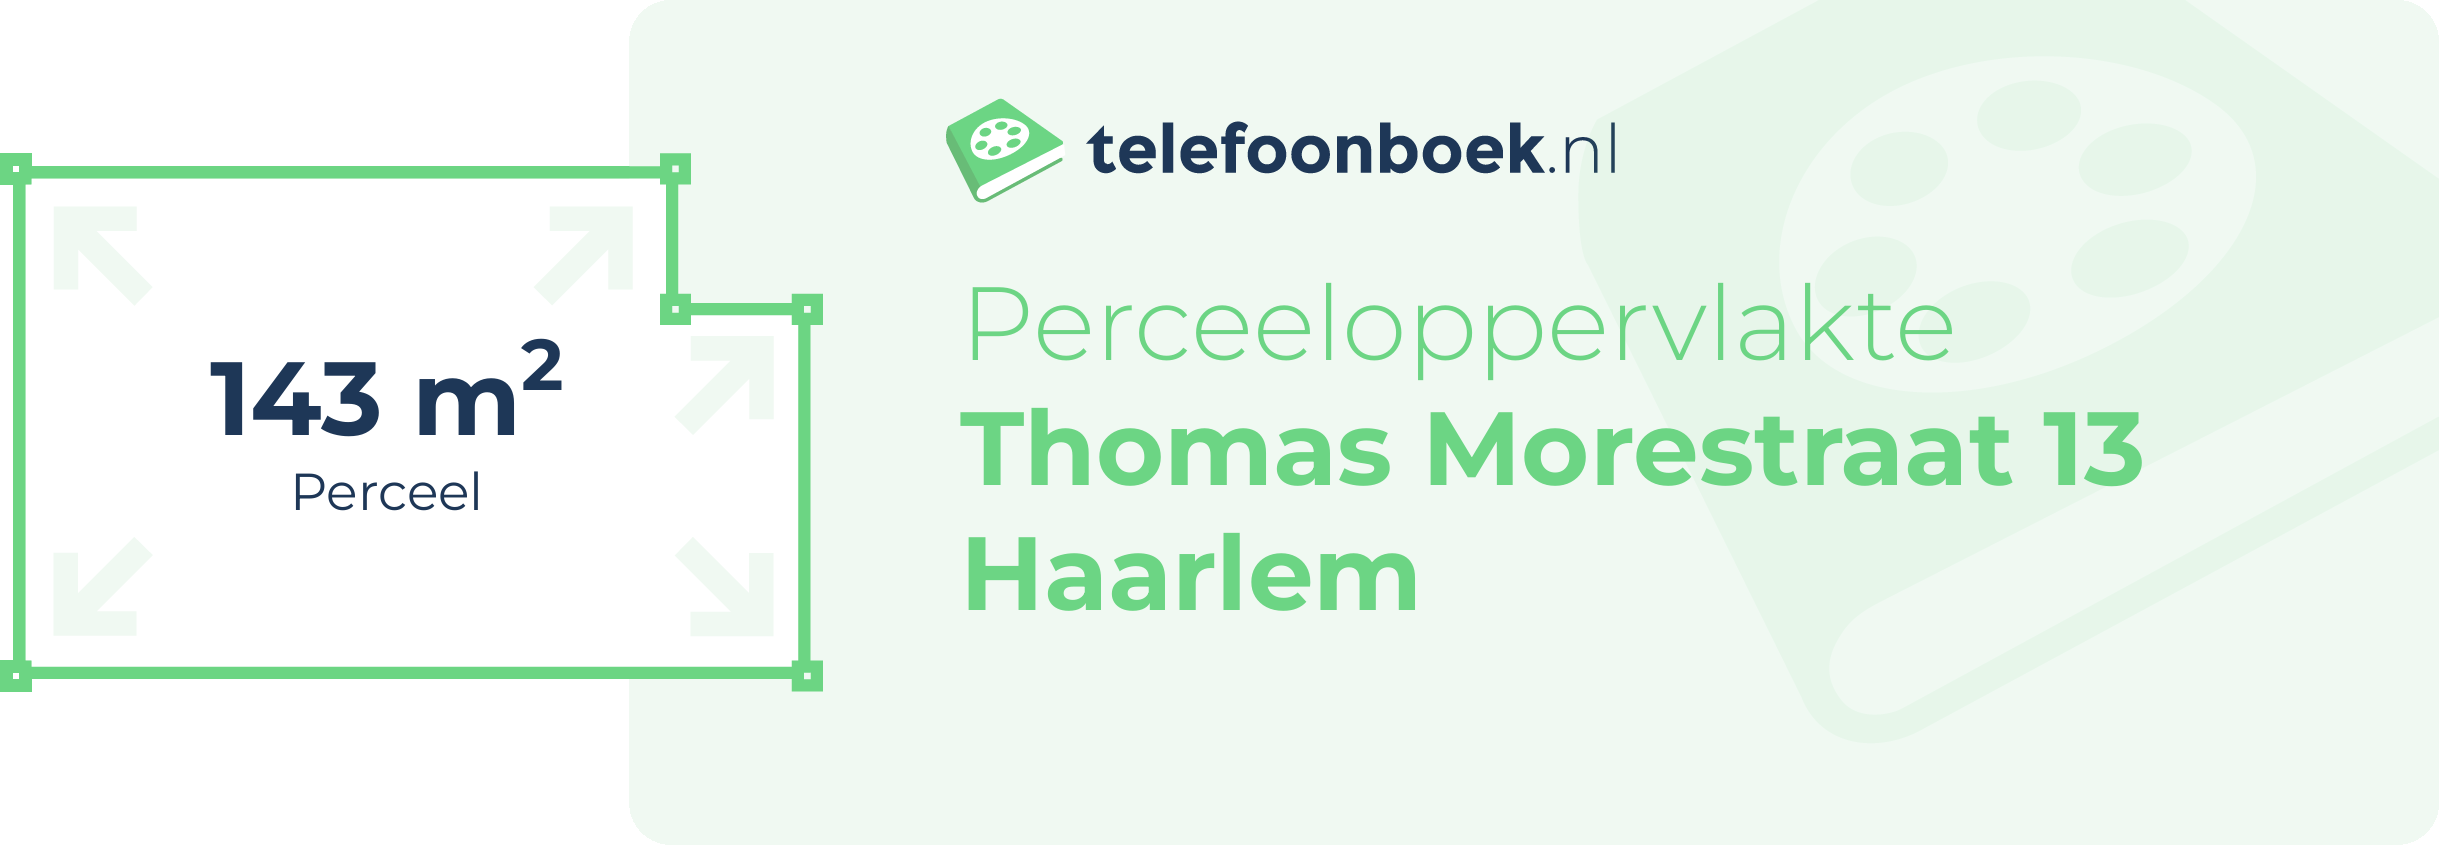 Perceeloppervlakte Thomas Morestraat 13 Haarlem